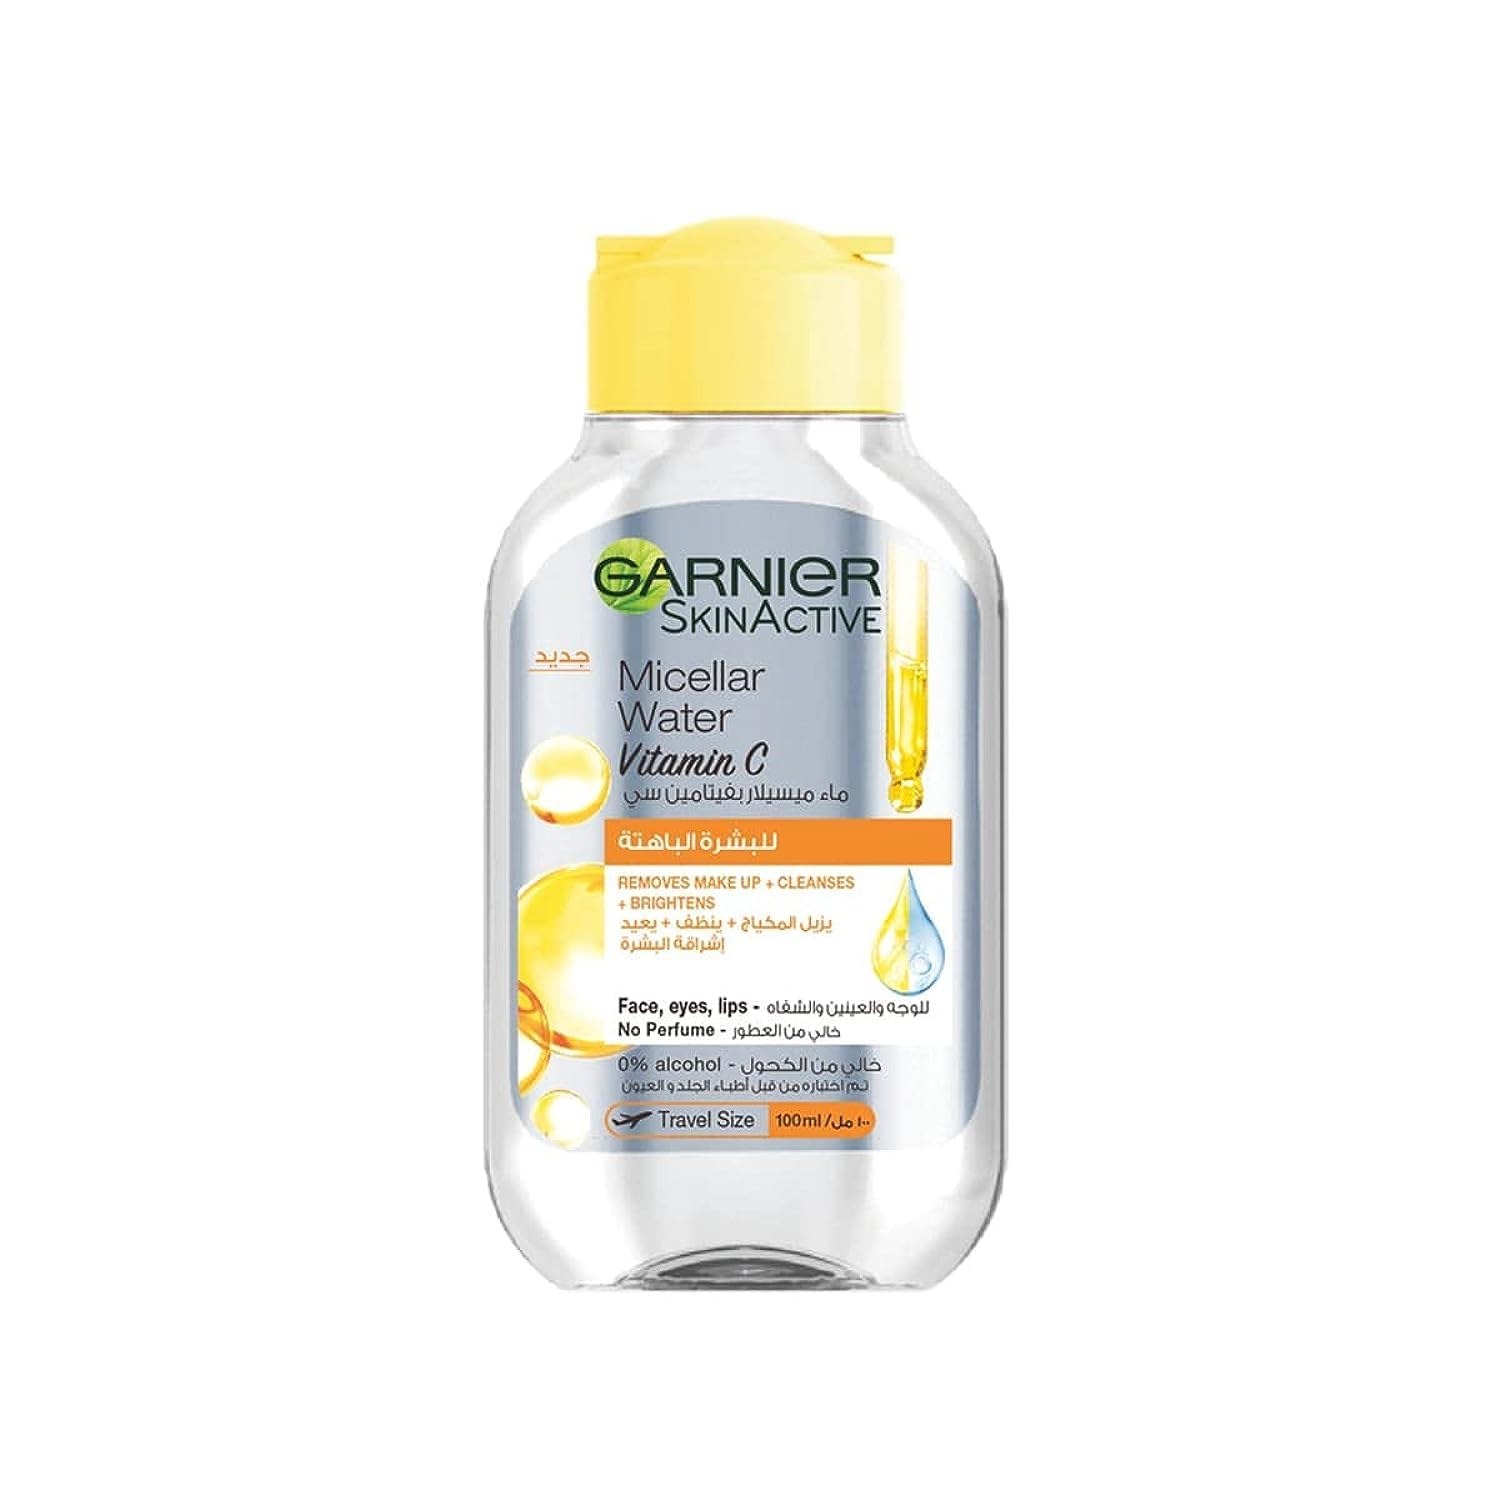 Garnier skinactive micellar cleansing water vitamin c 100 ml pack may vary